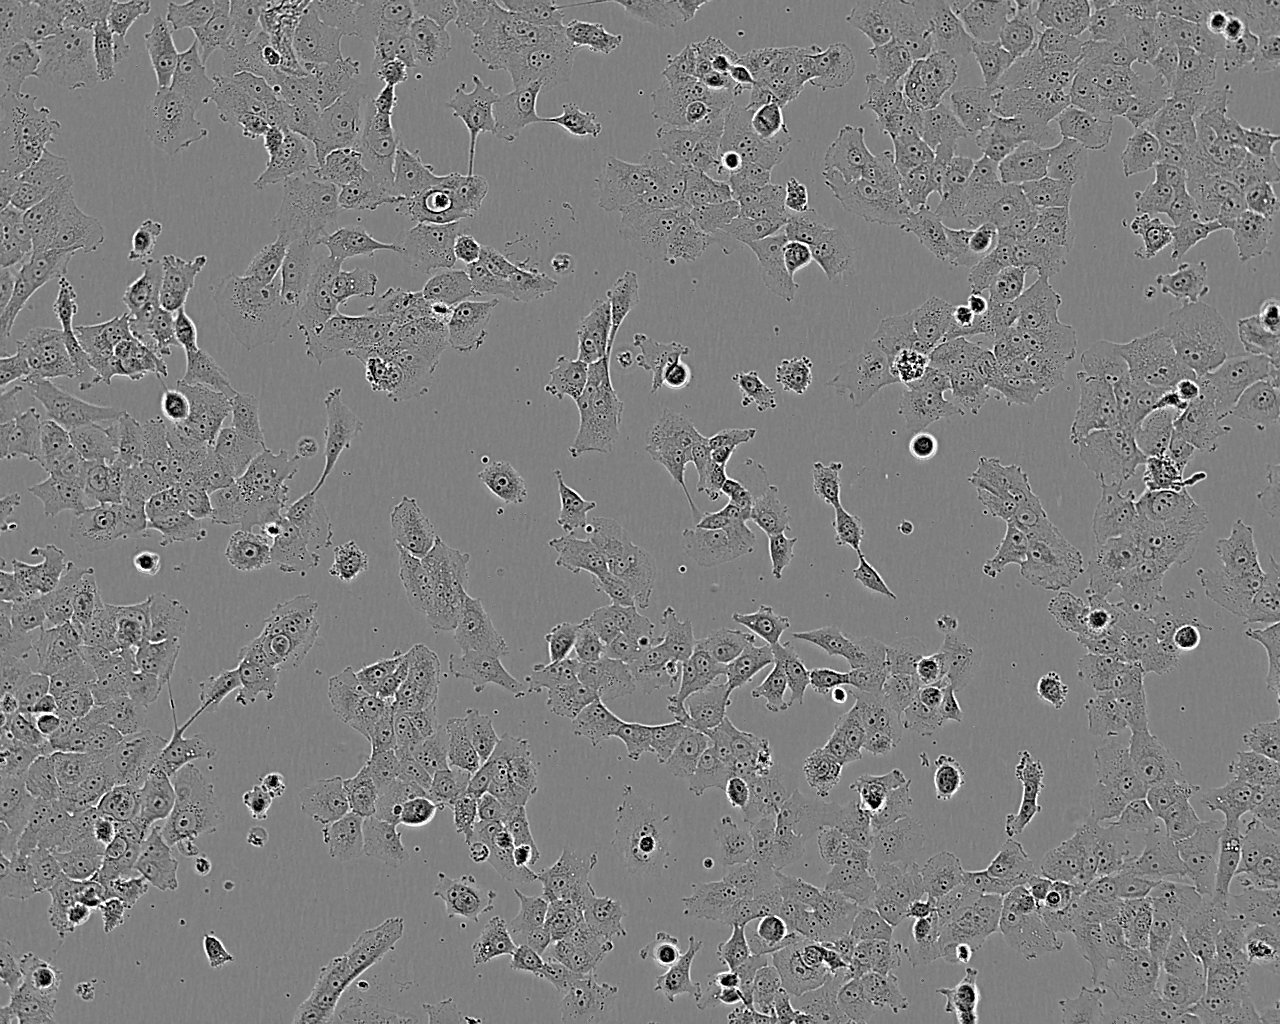 KNS-42 Cell:人脑胶质瘤细胞系